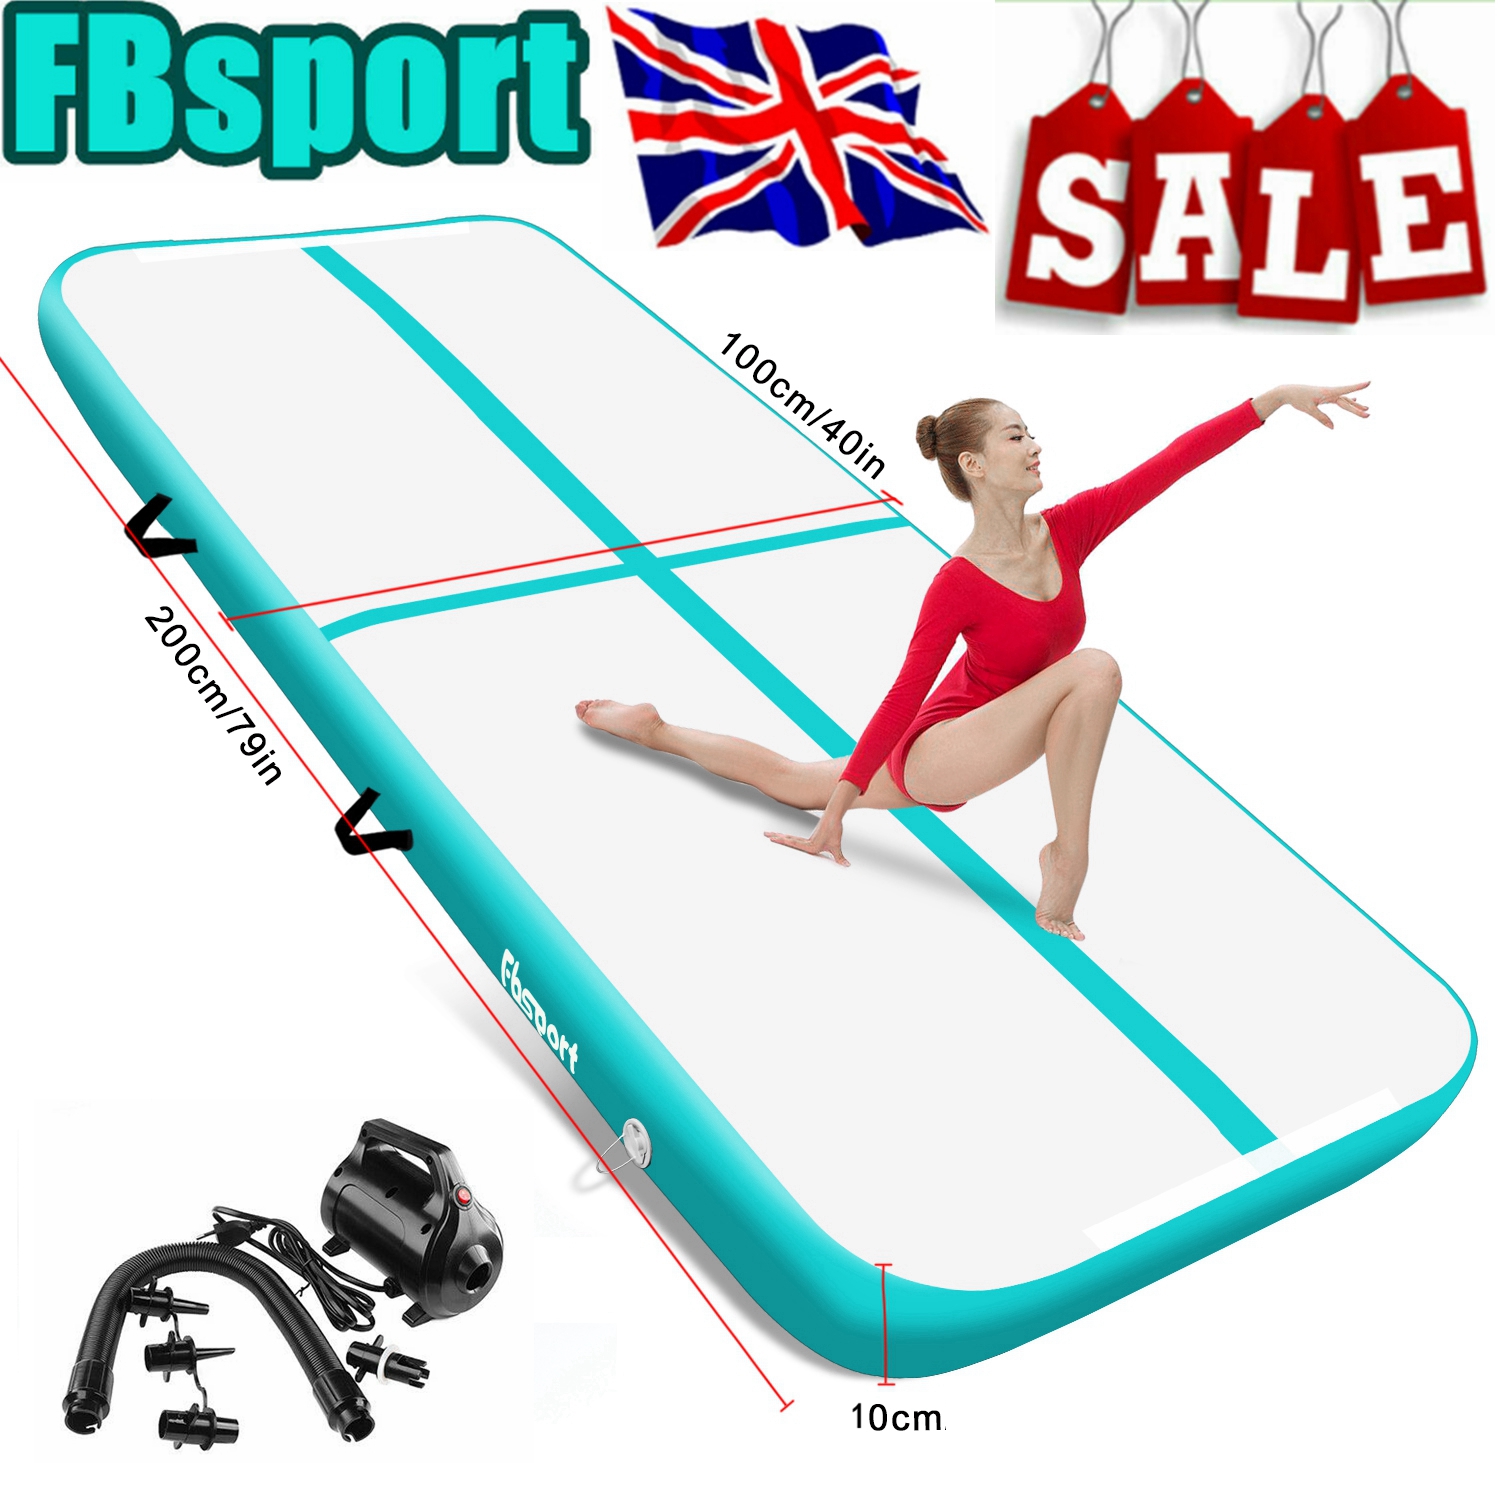 3/4Mx2M Fbsport Air Track Inflatable Airtrack Gymnastics Tumbling Mat Pump UK 